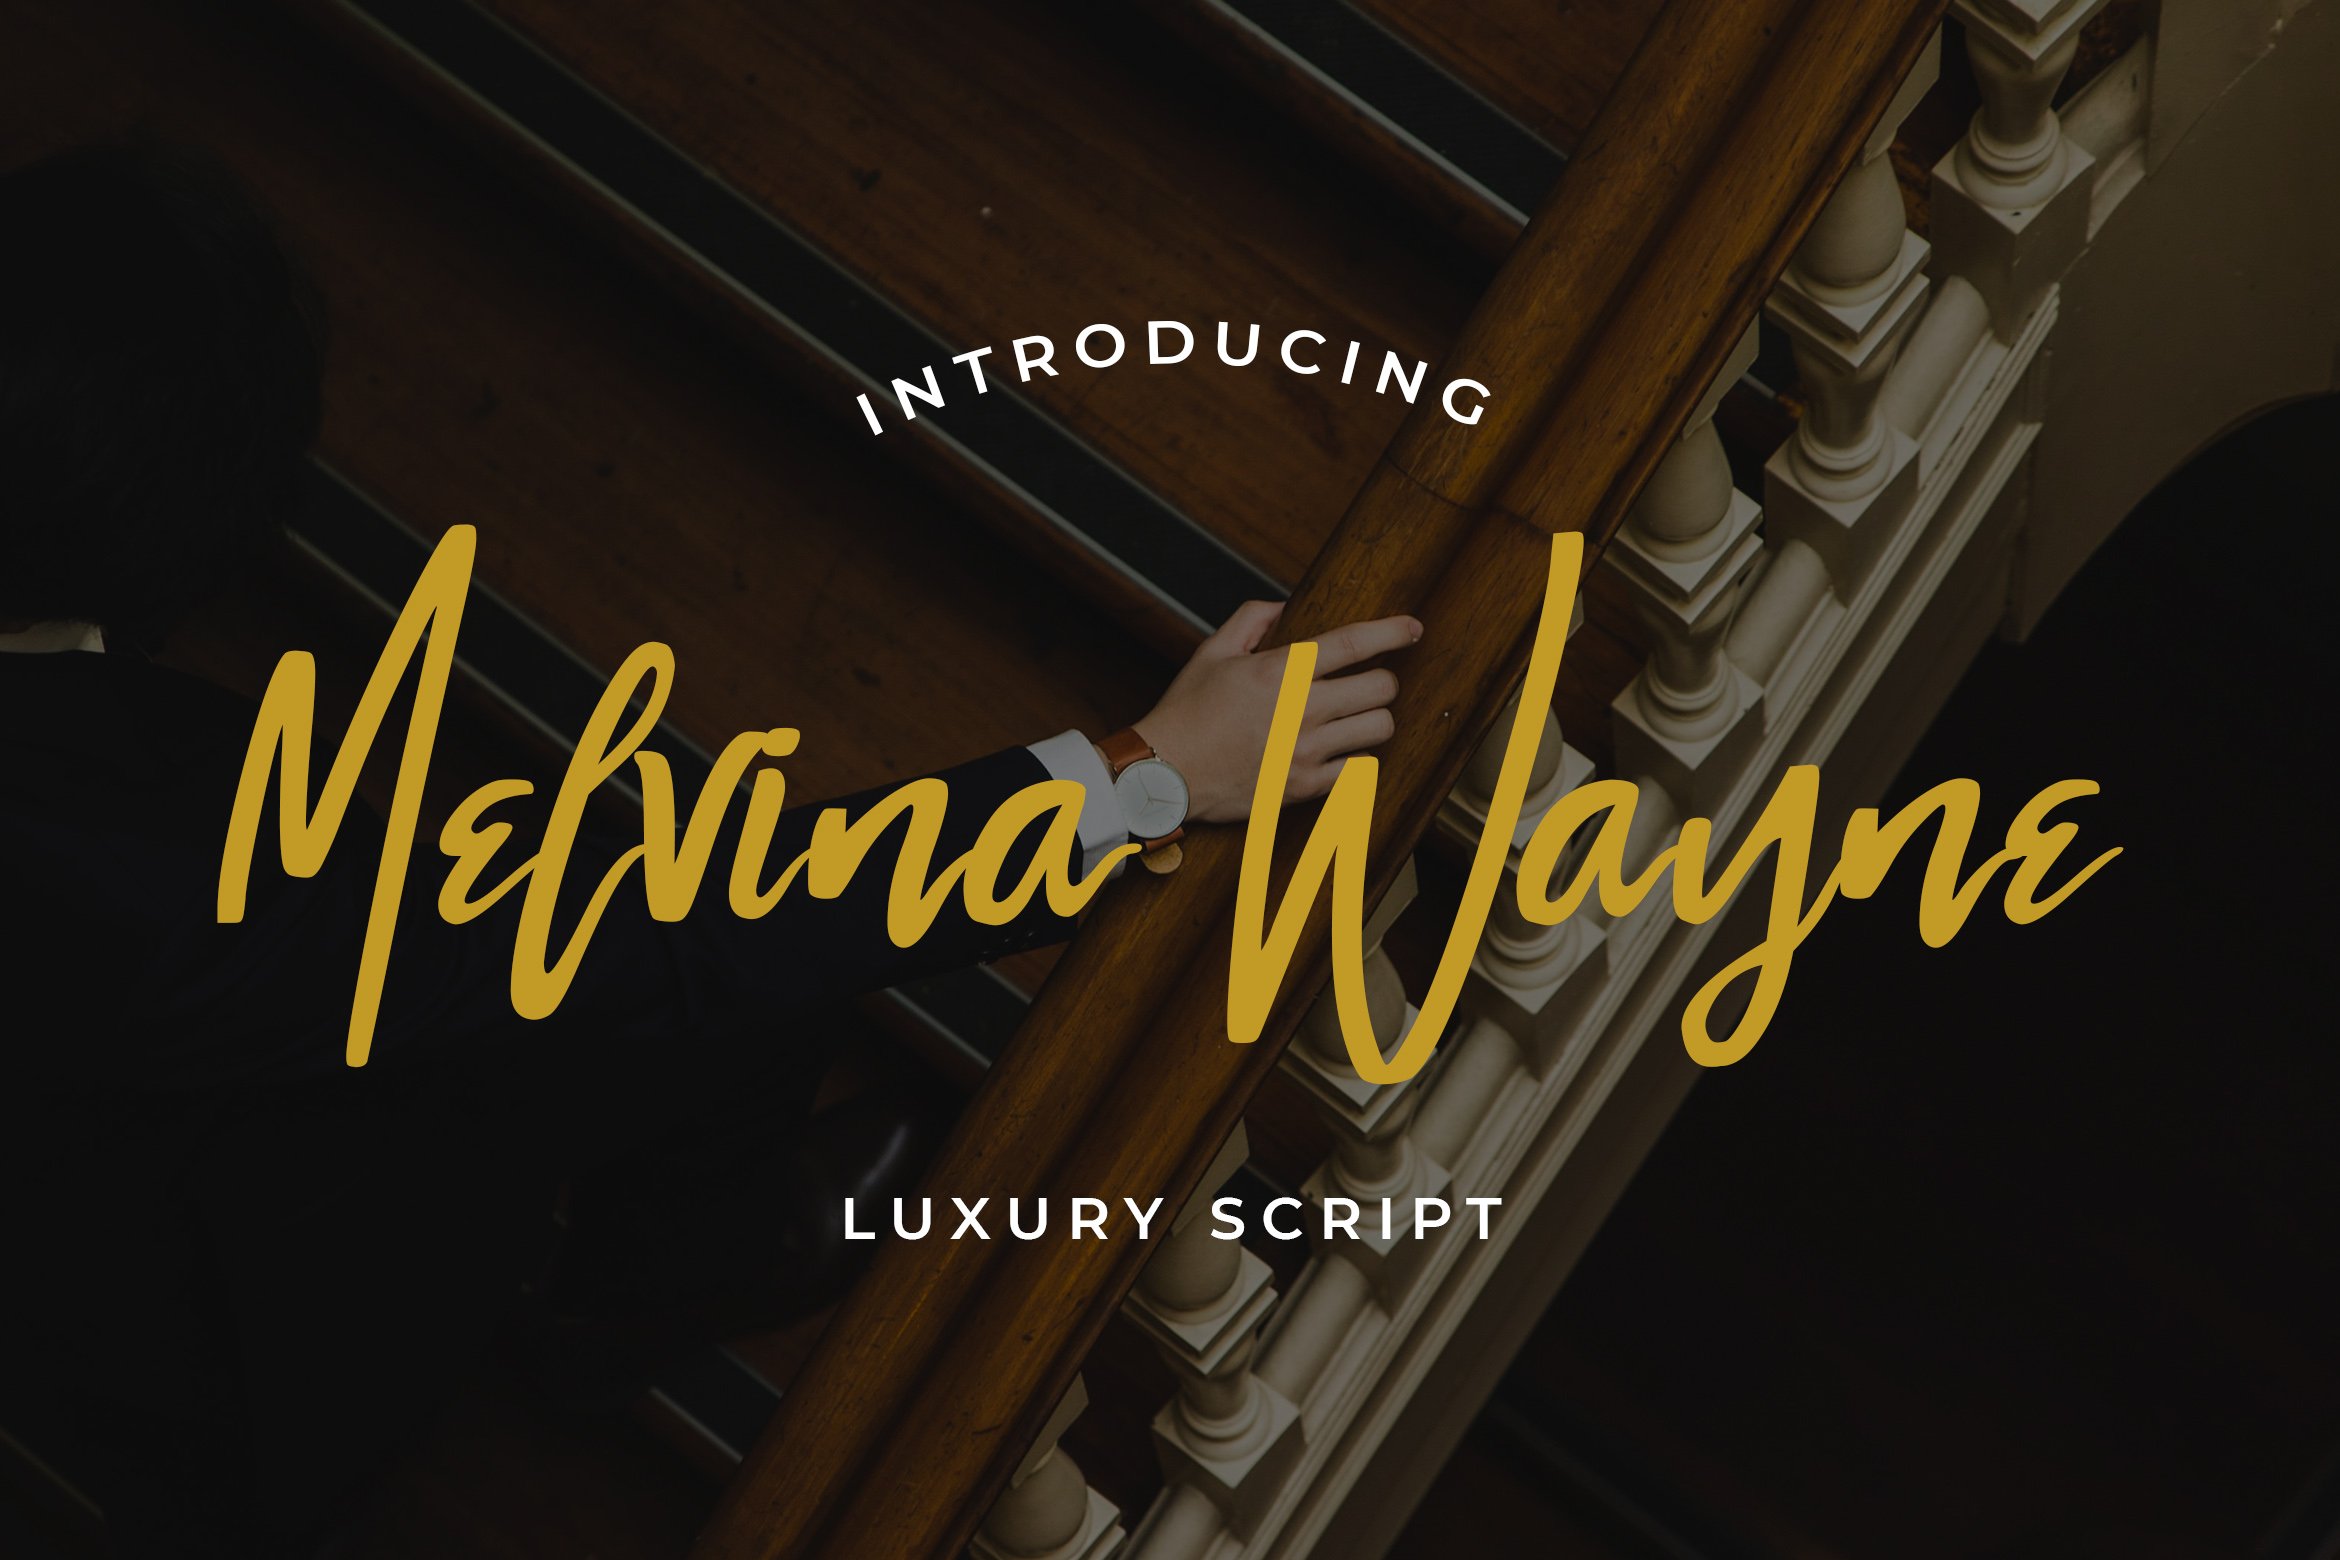 Melvina Wayne - Luxury Script Font cover image.